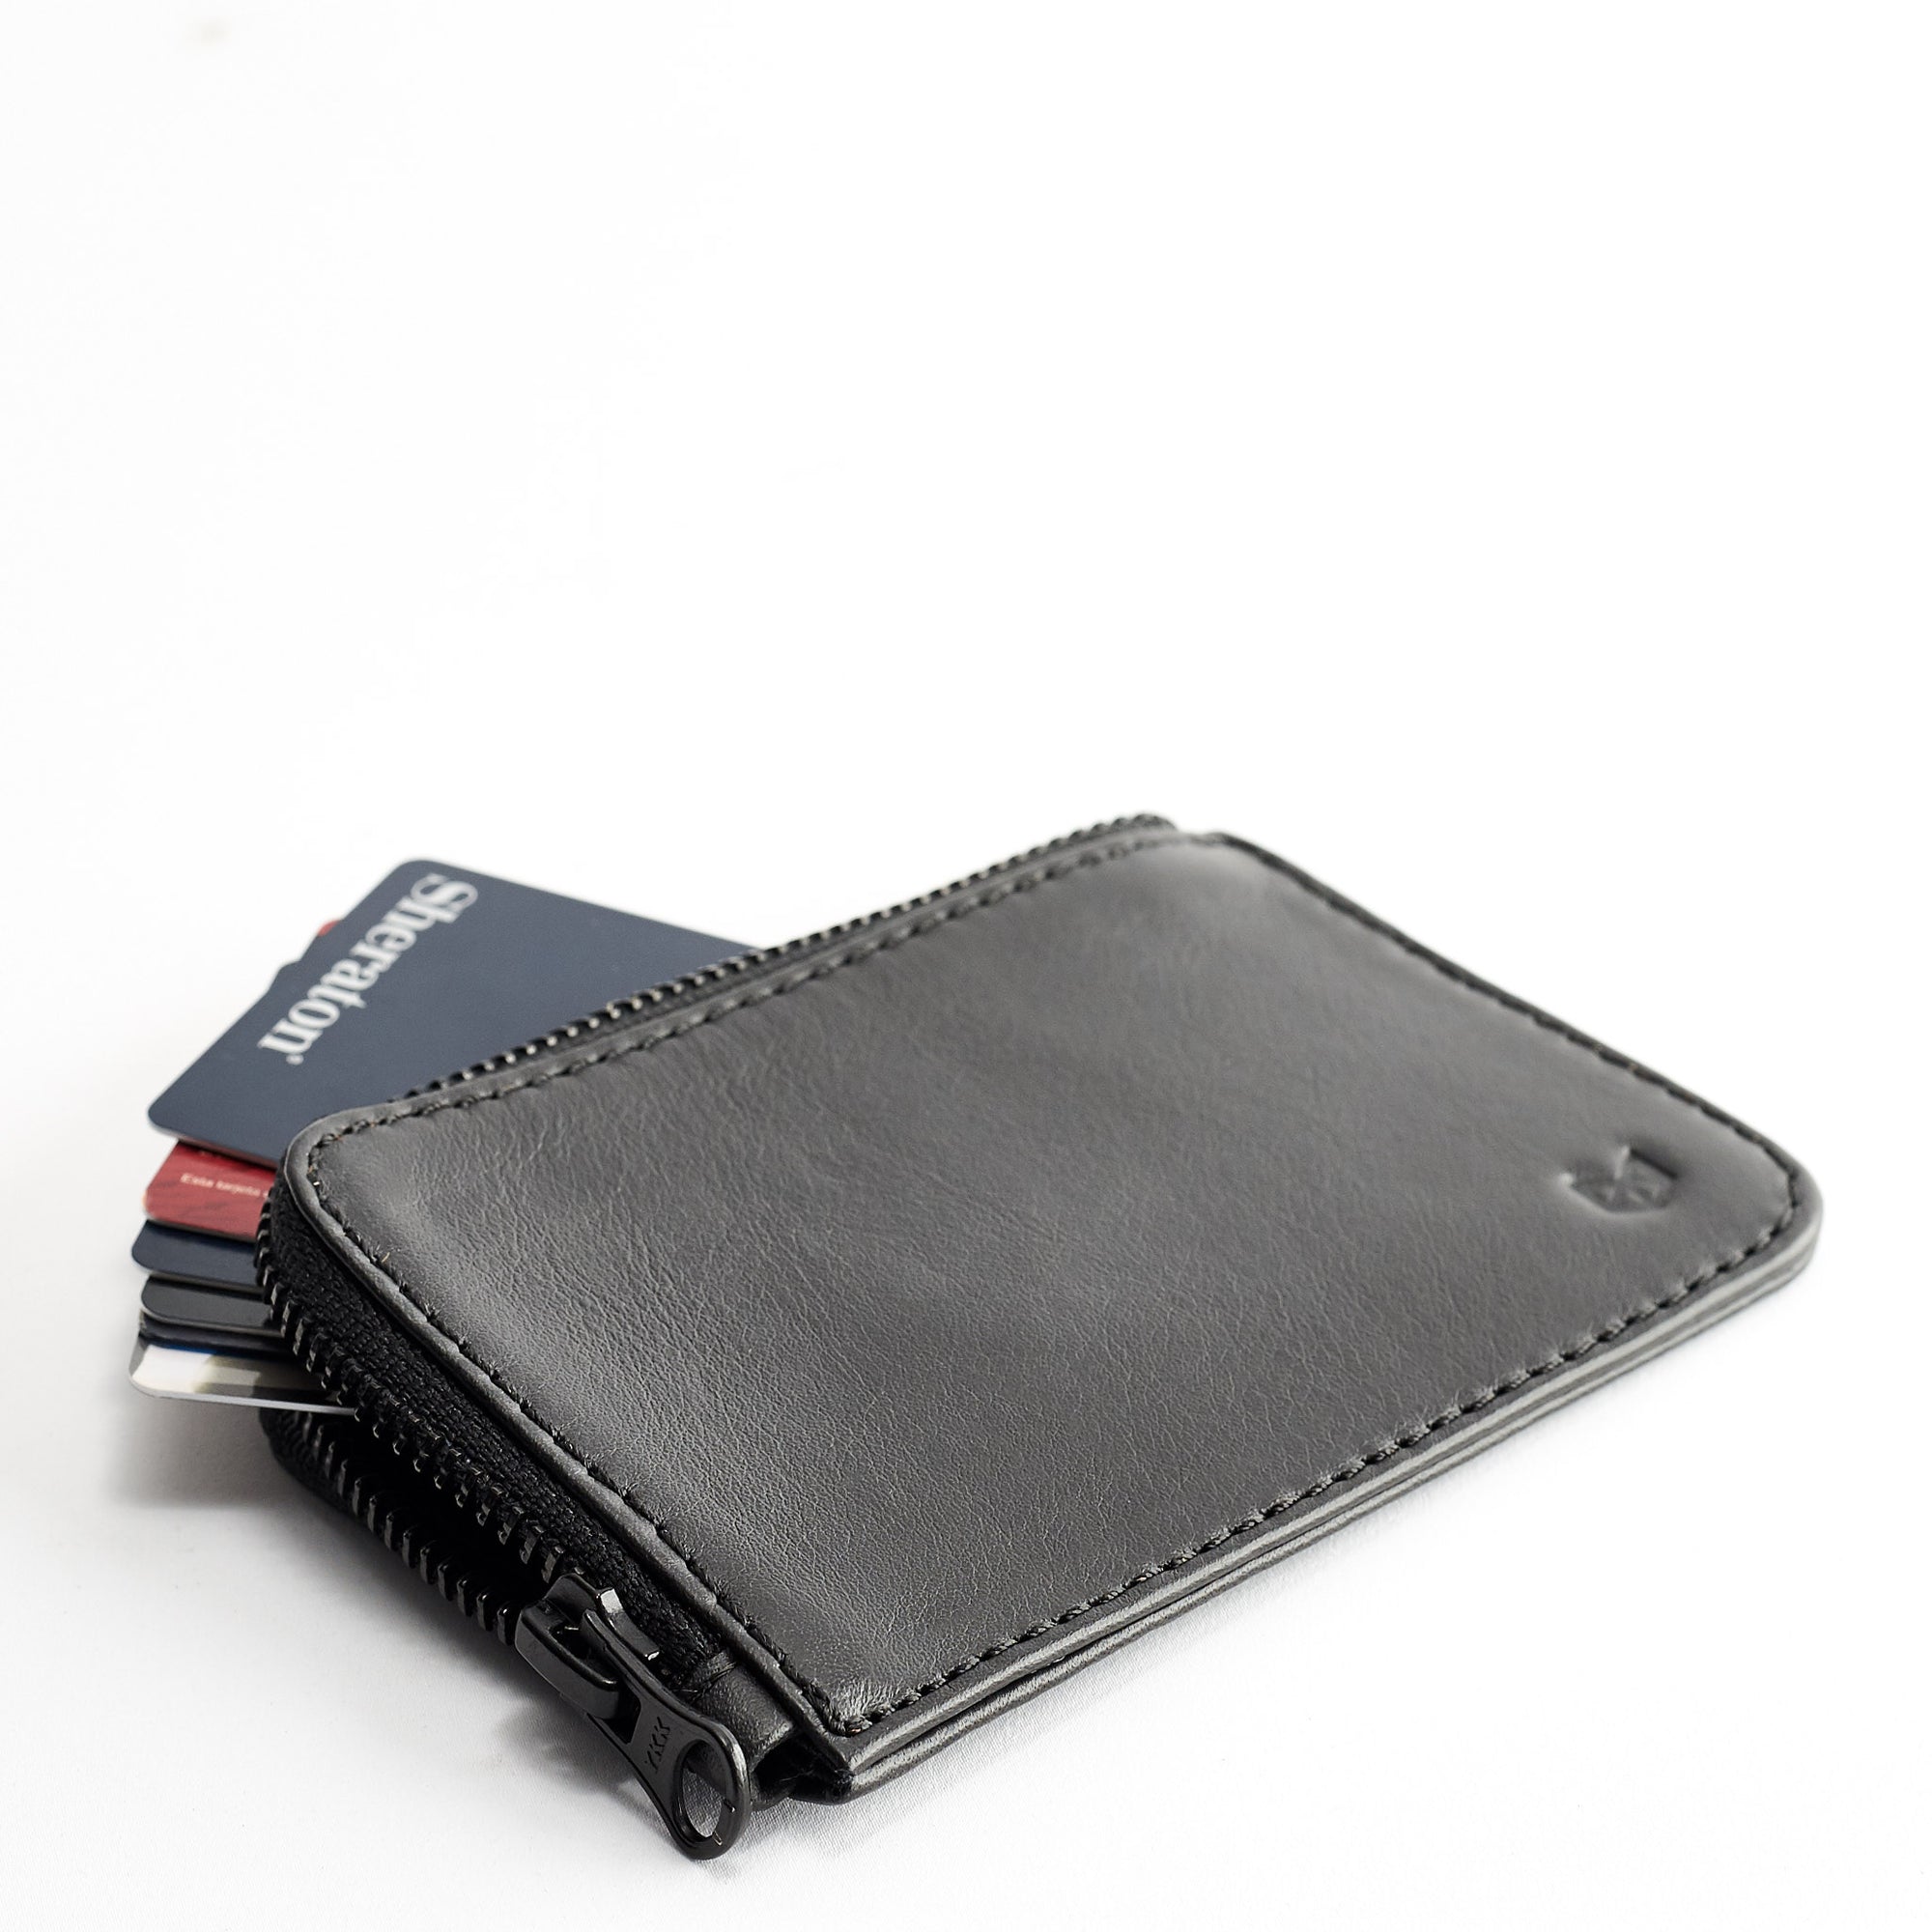 Style. Black slim zip credit card holder, business card pouch, bills / coins minimalist pocket wallet, mens gift.